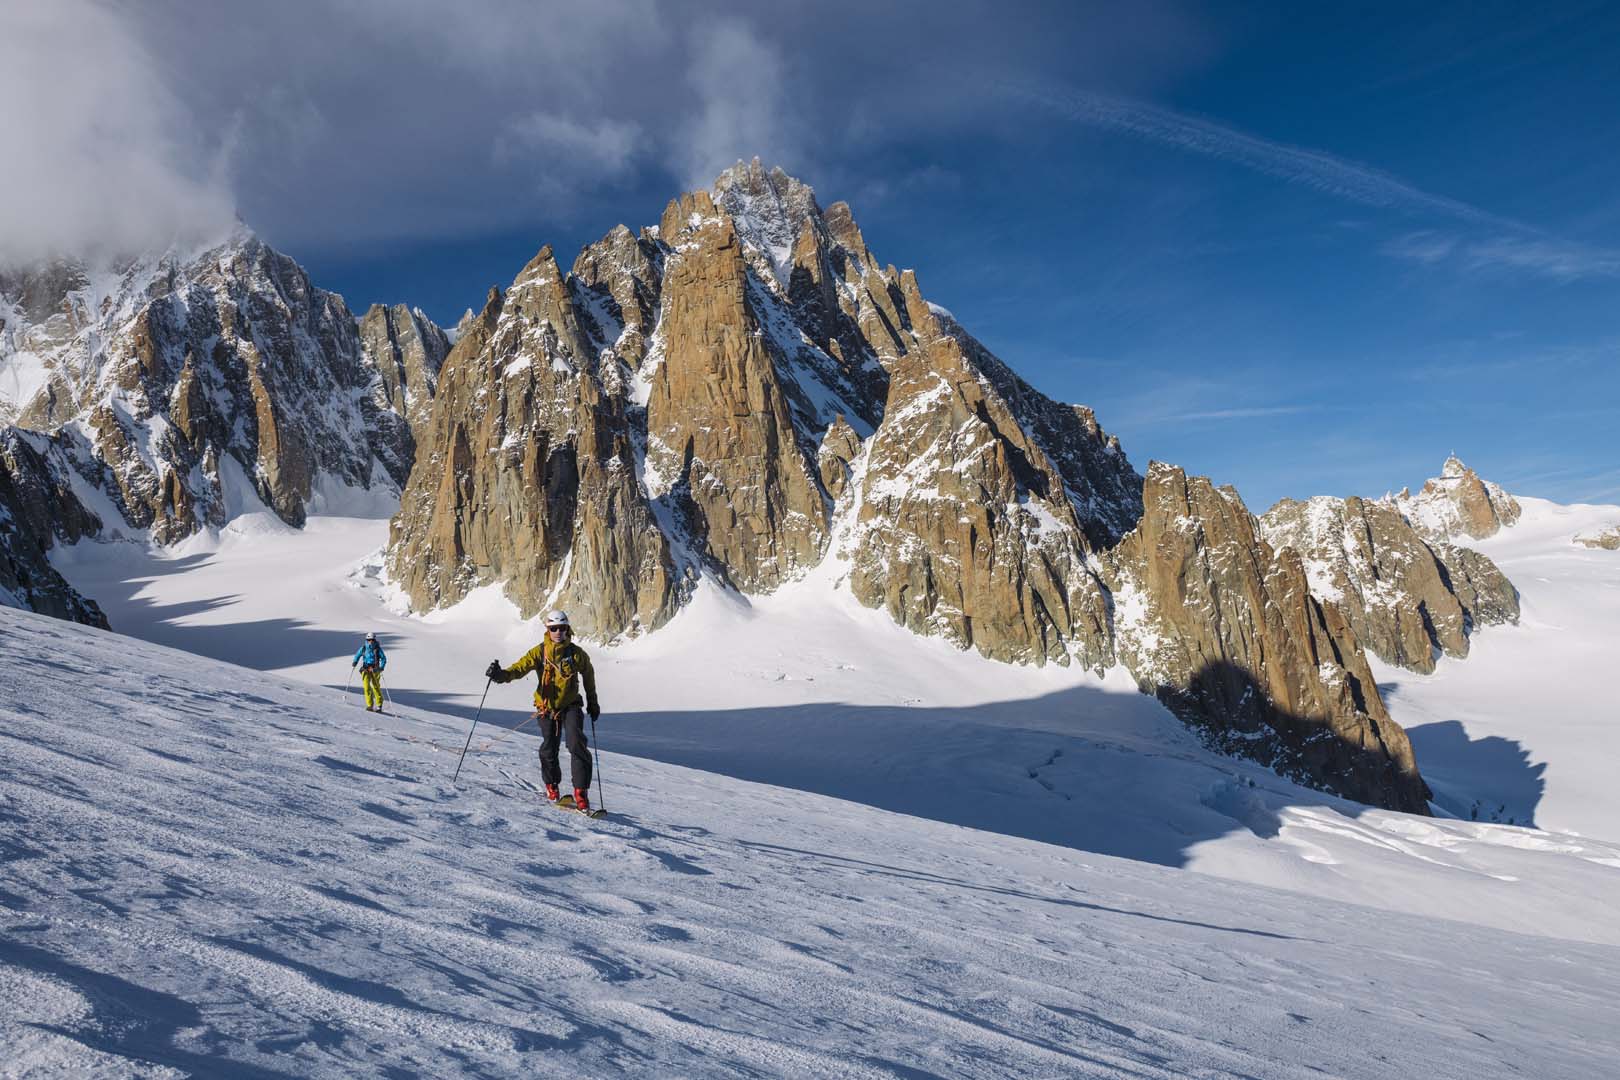 Choisir son casque de ski de randonnée - Blog Montania Sport